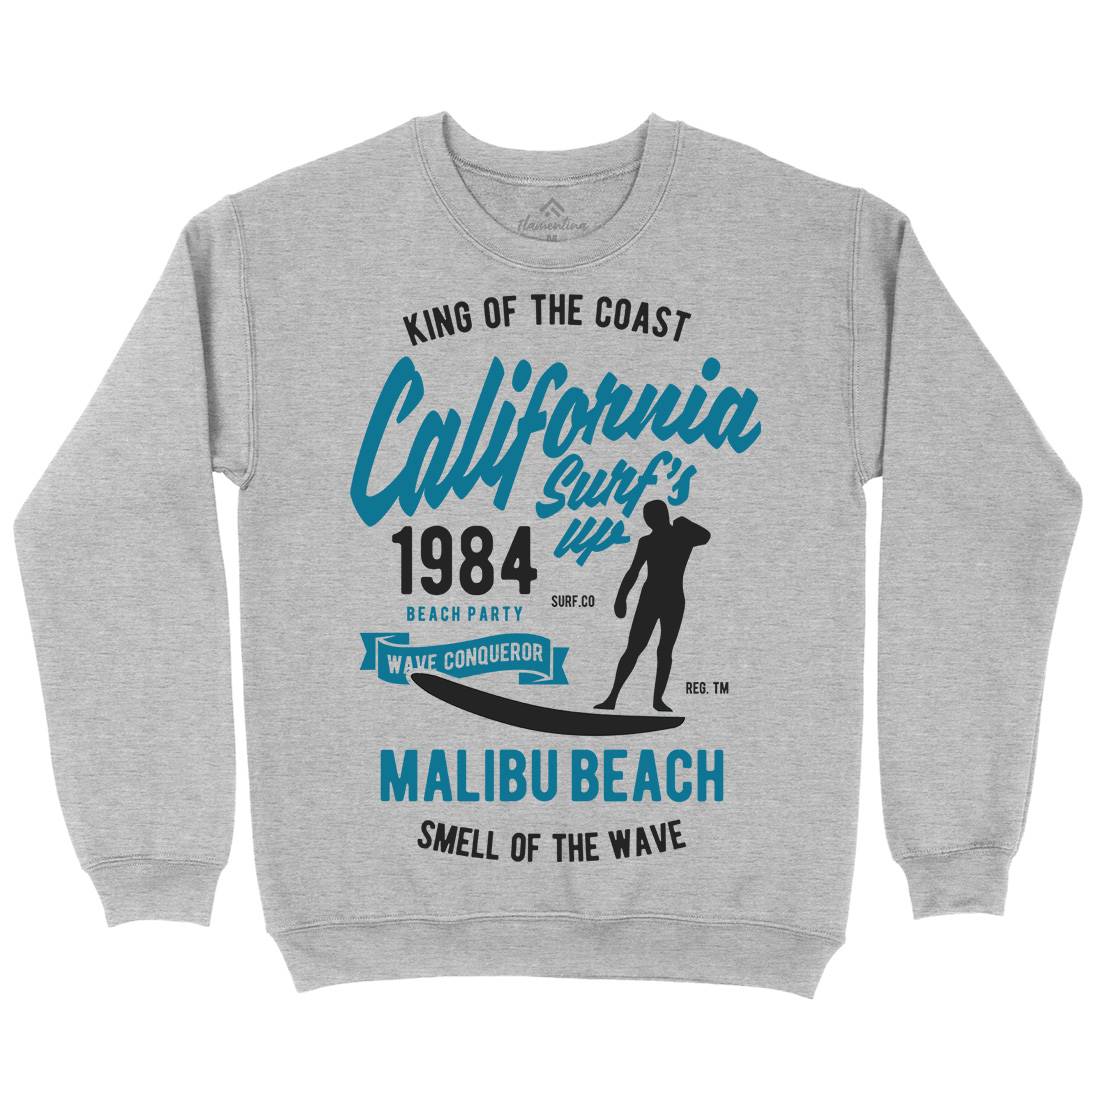 California Surfs Up Mens Crew Neck Sweatshirt Surf B389